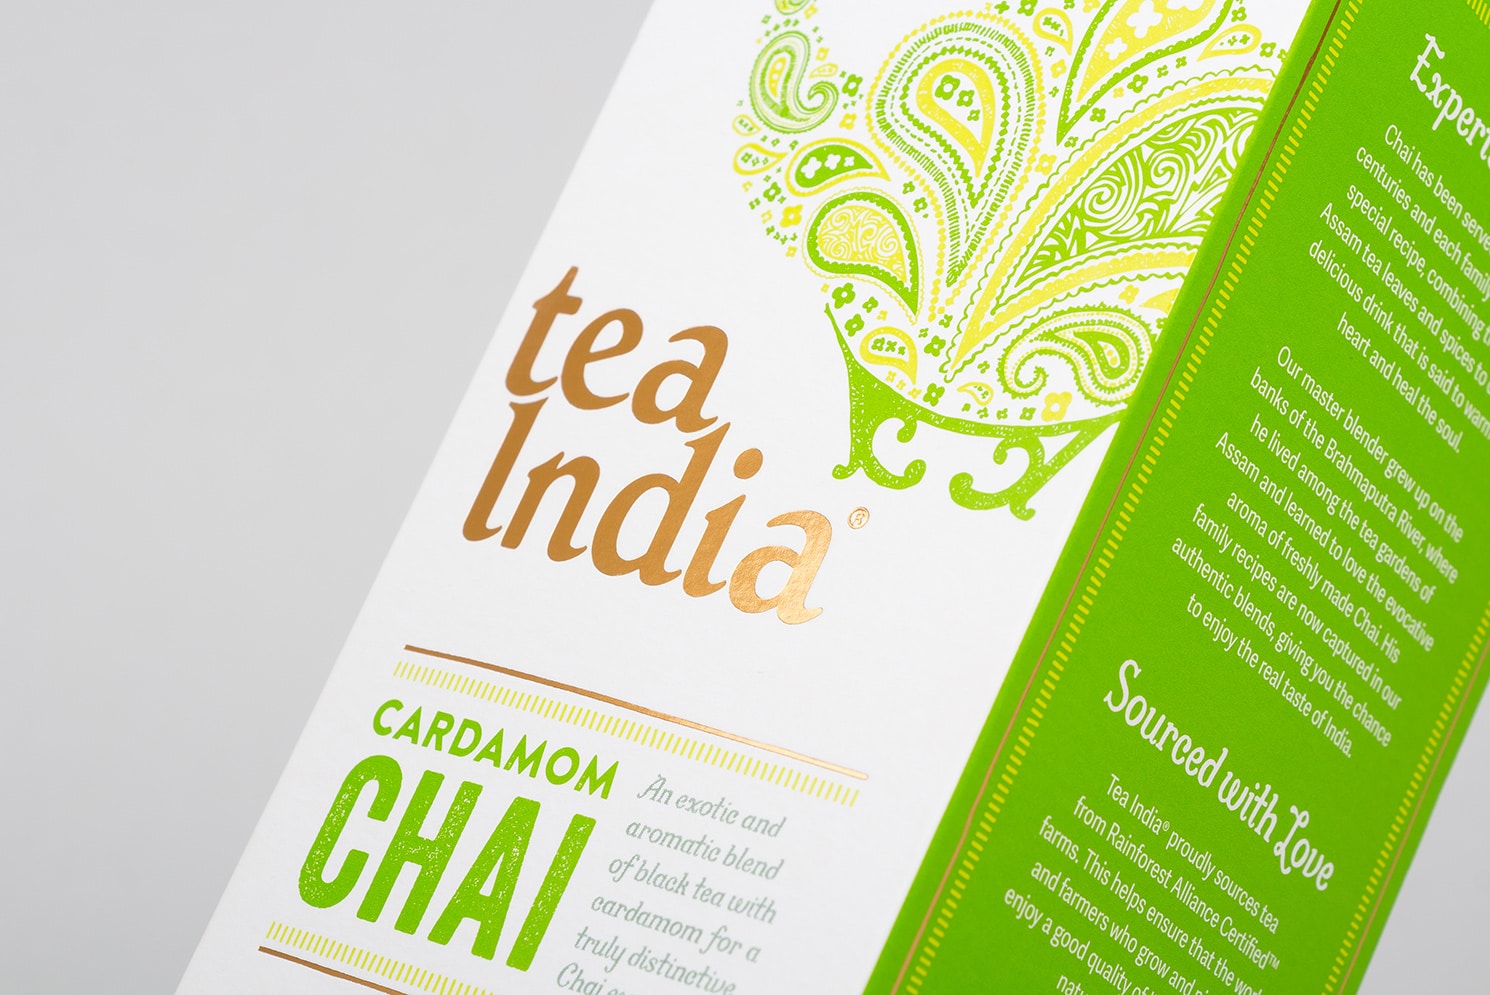 Tea India